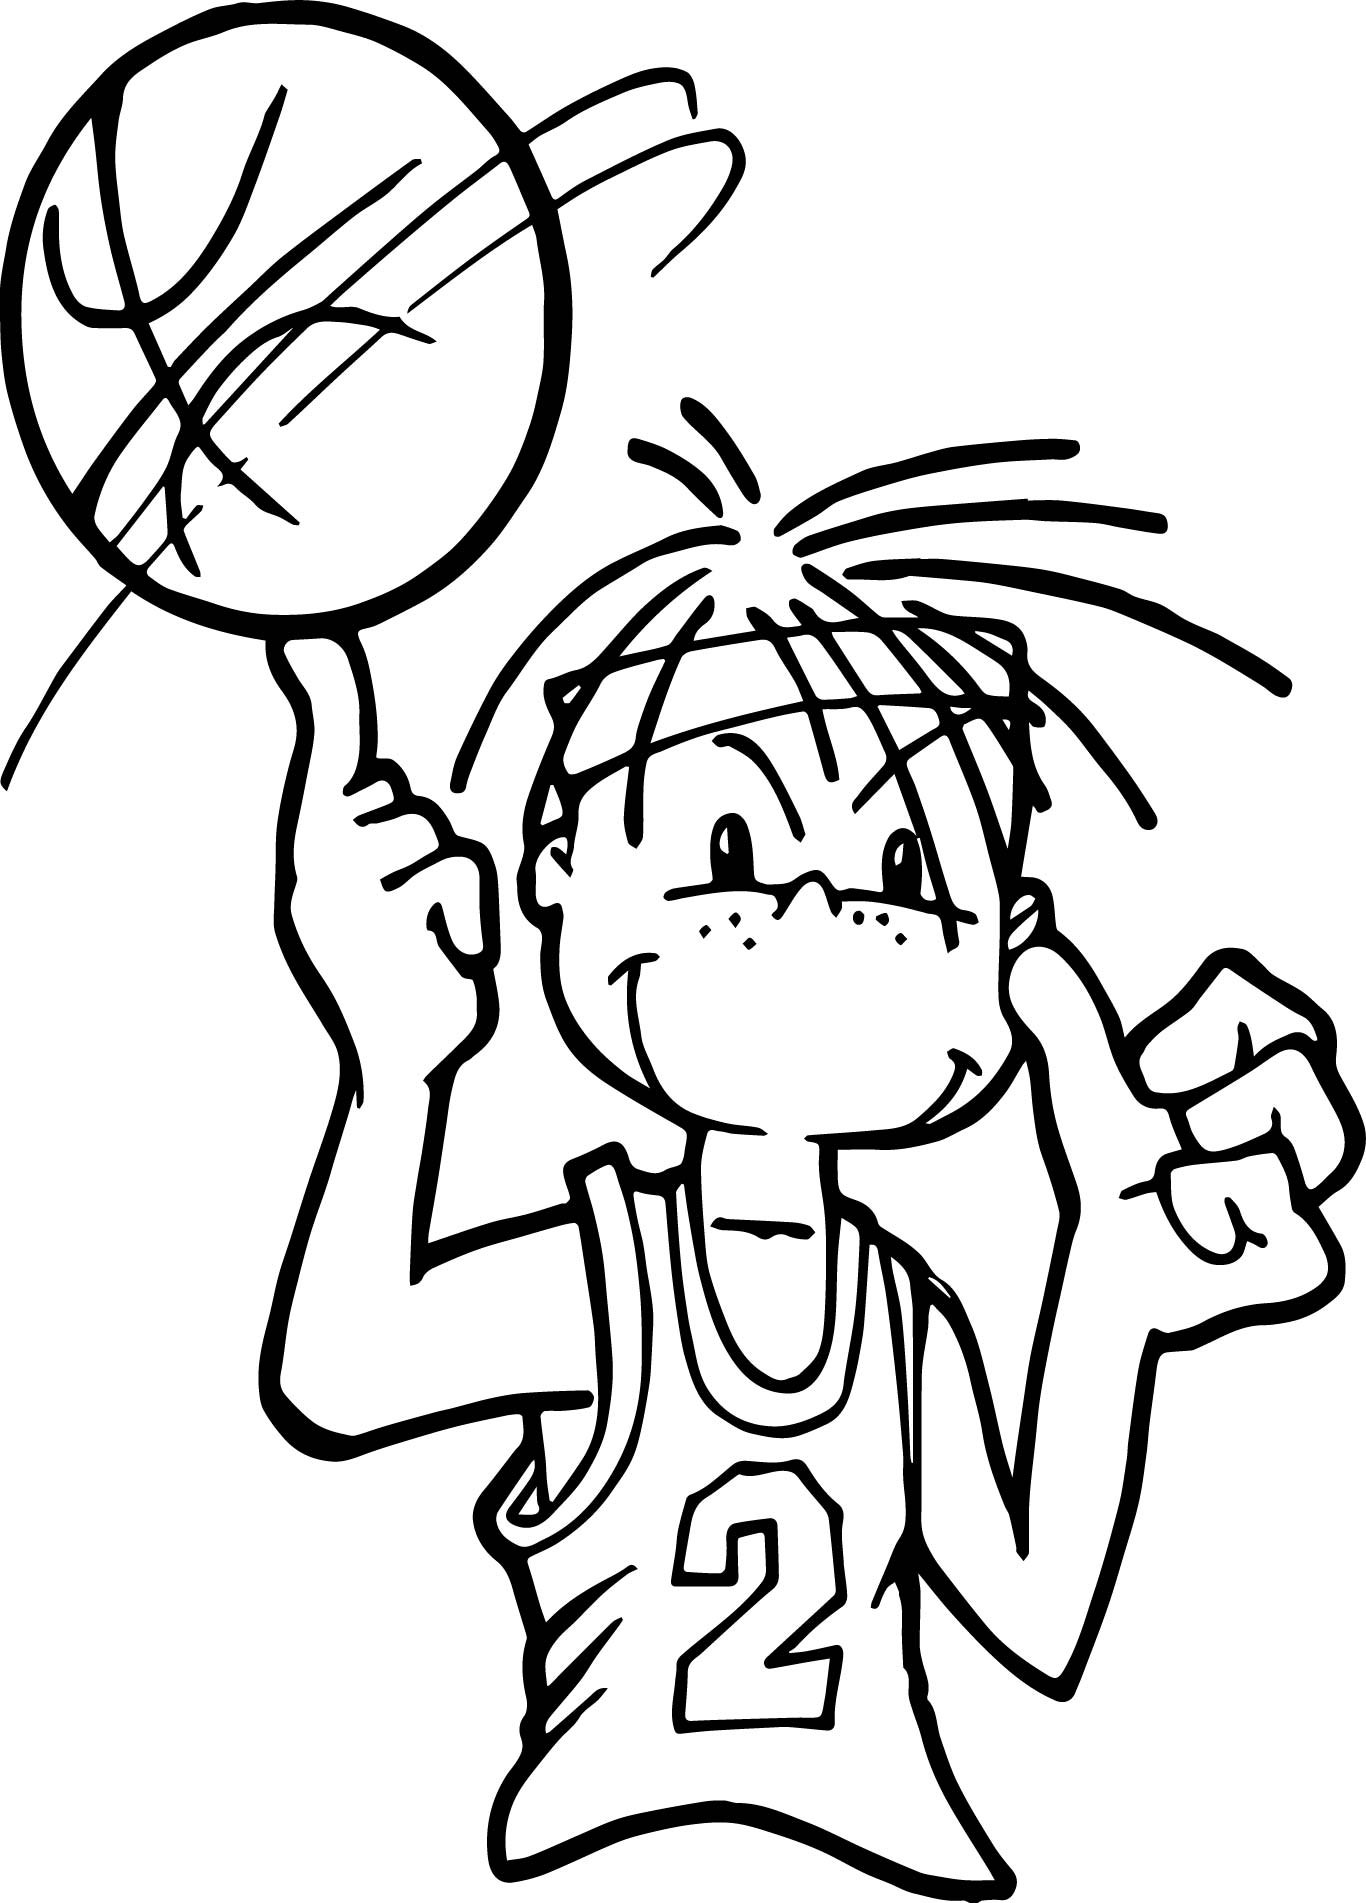 Раскраска баскетбол. Нарисовать баскетбол. Баскетбол рисунок. Детские рисунки баскетбол. Раскраски для девочек баскетбол.